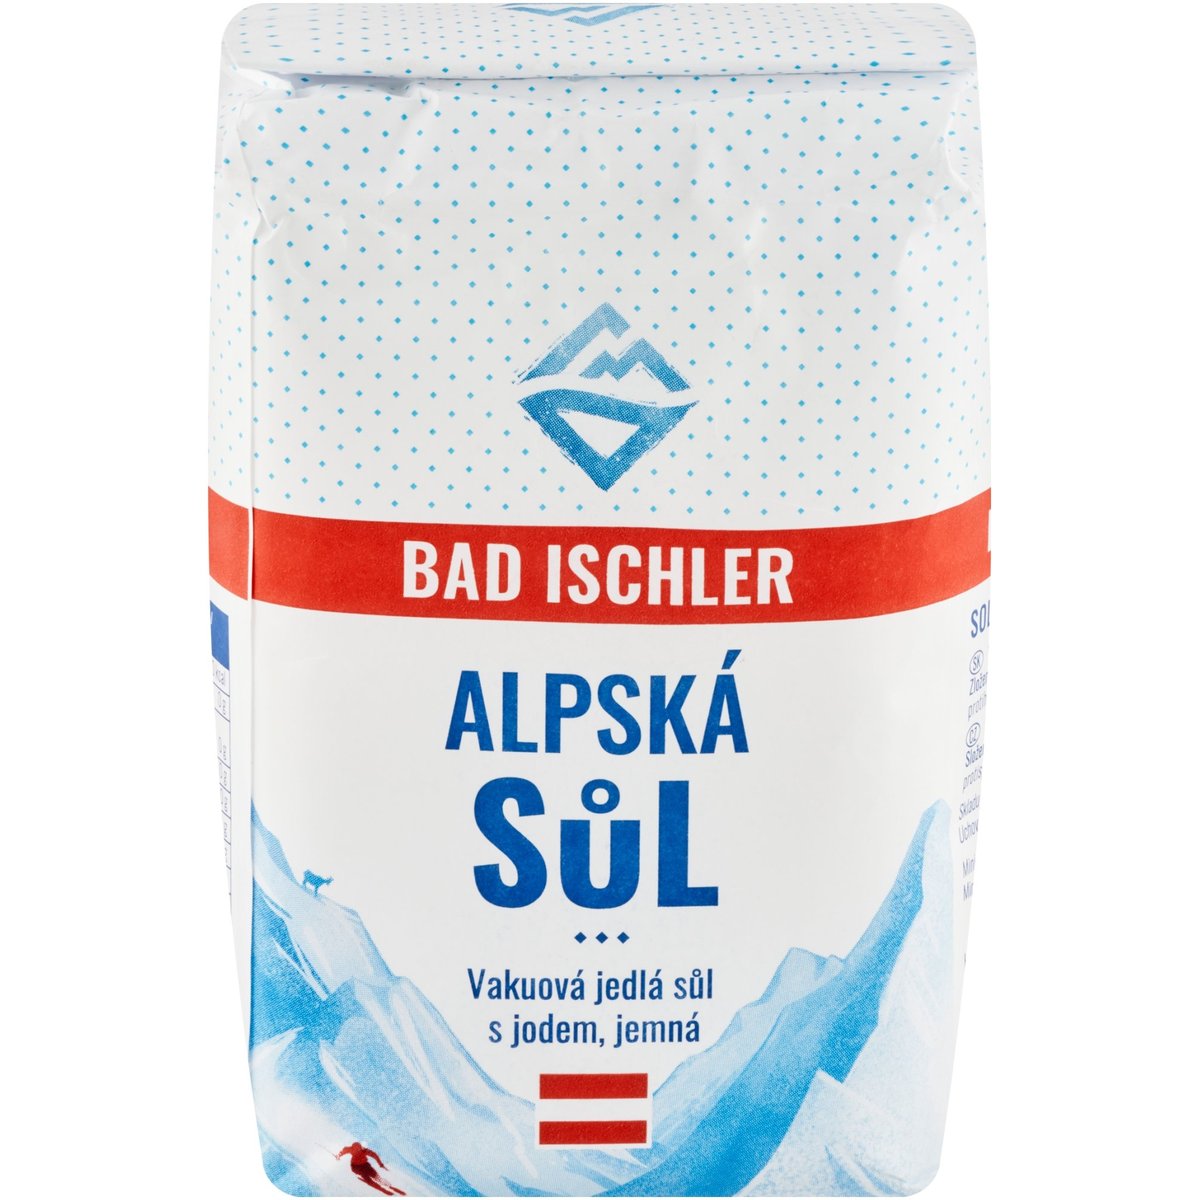 Bad Ischler Alpská jemná sůl s jódem